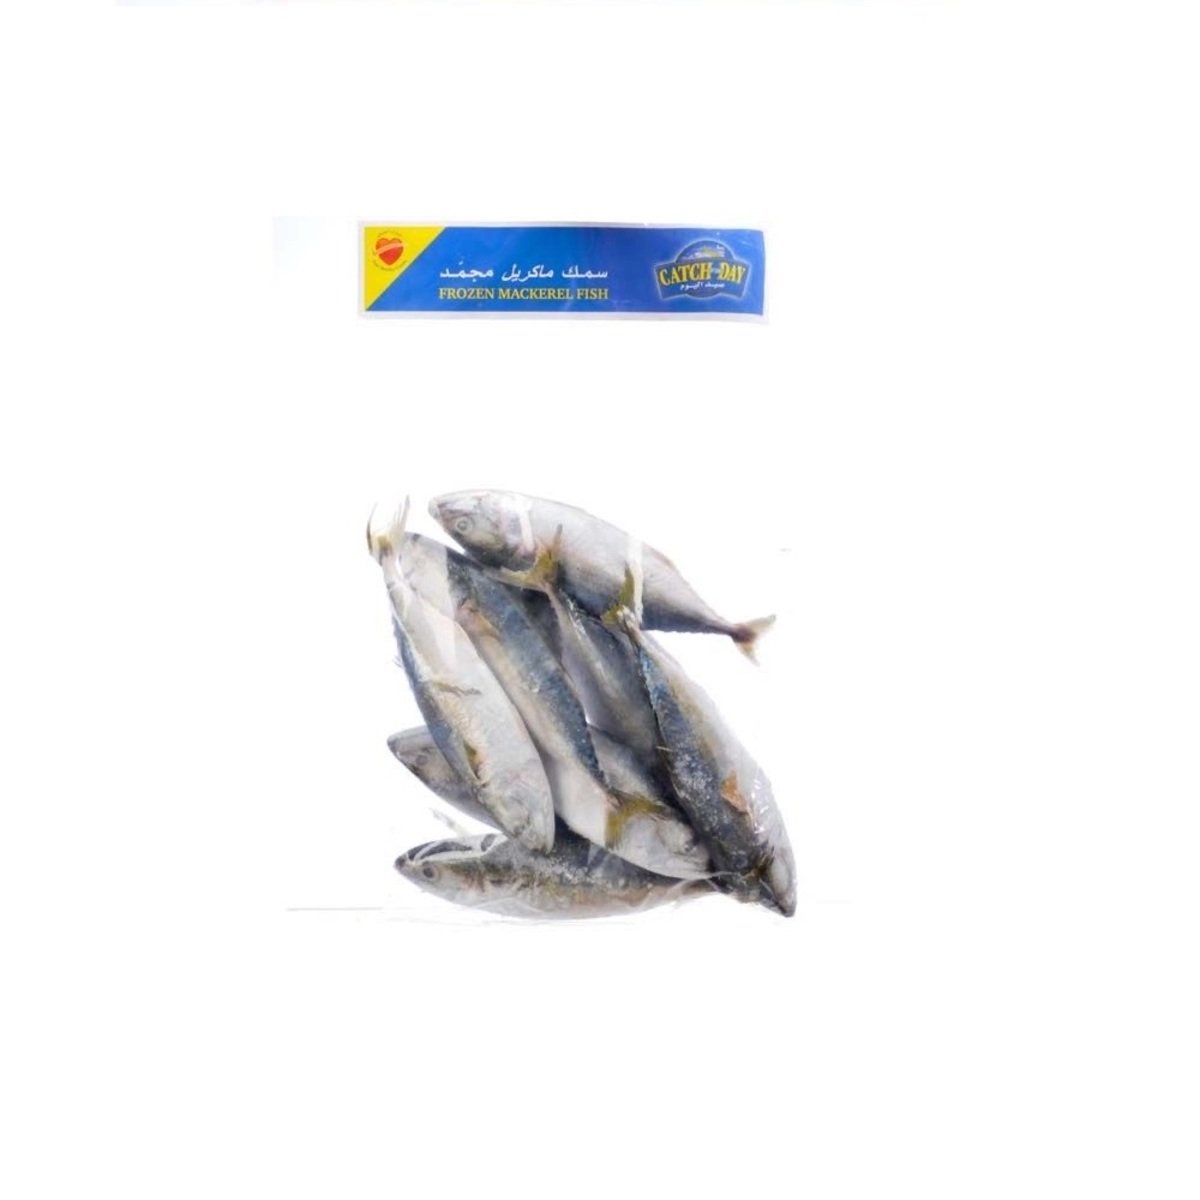 Catch Of the Day Frozen Mackerel Fish 1kg